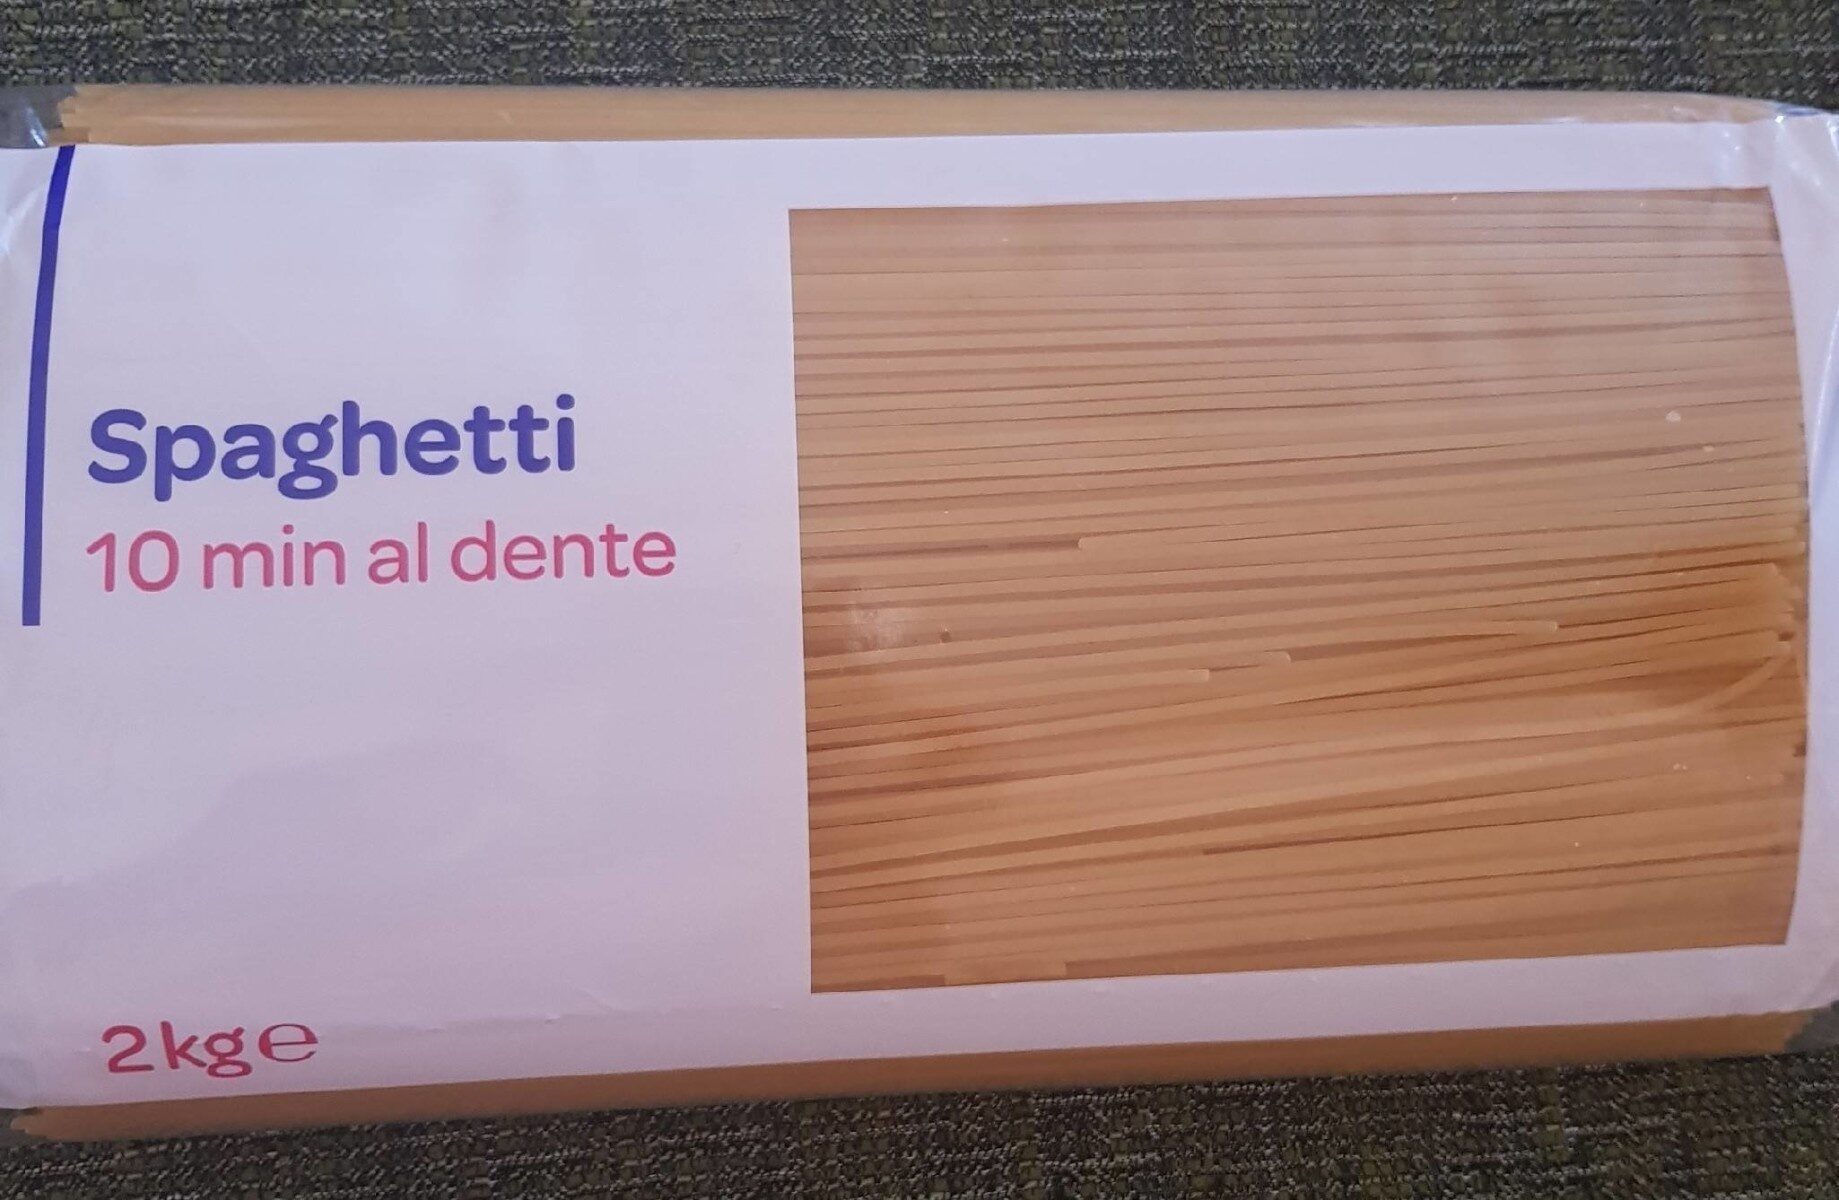 Spaghetti 2kg Carrefour - Producto